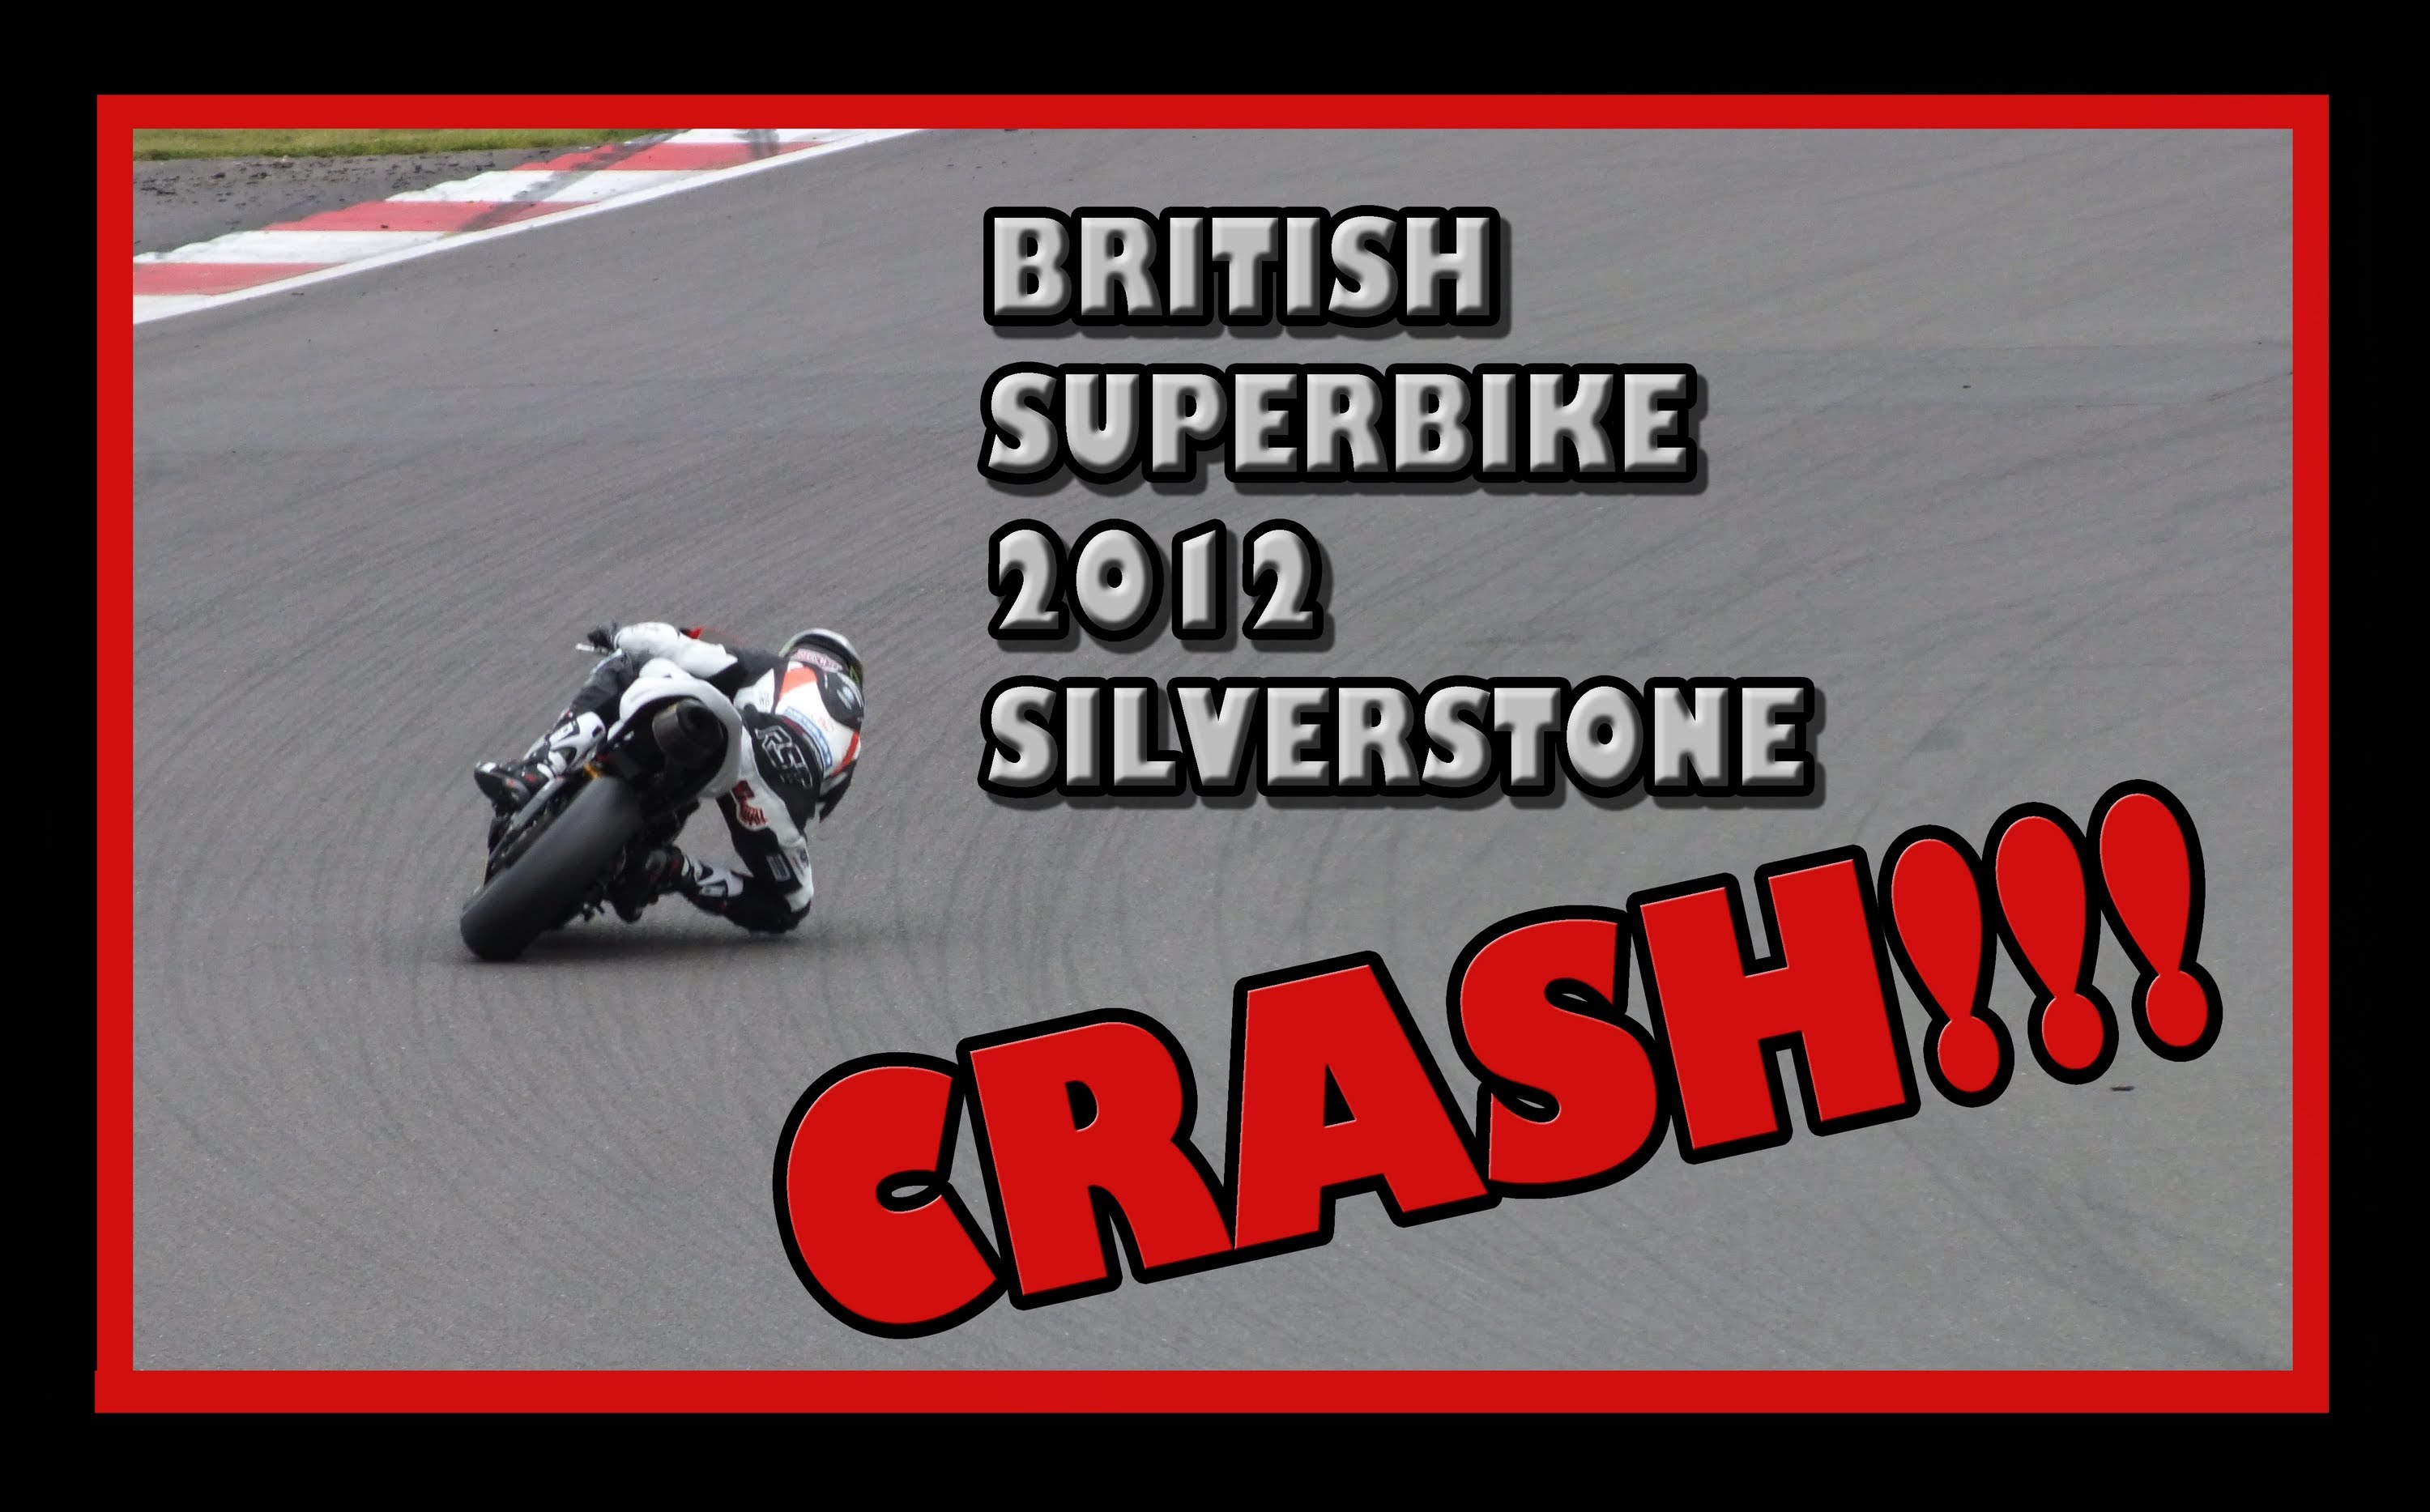 [BSB] British Superbike 2012 Silverstone Lap 2 CRASH!!